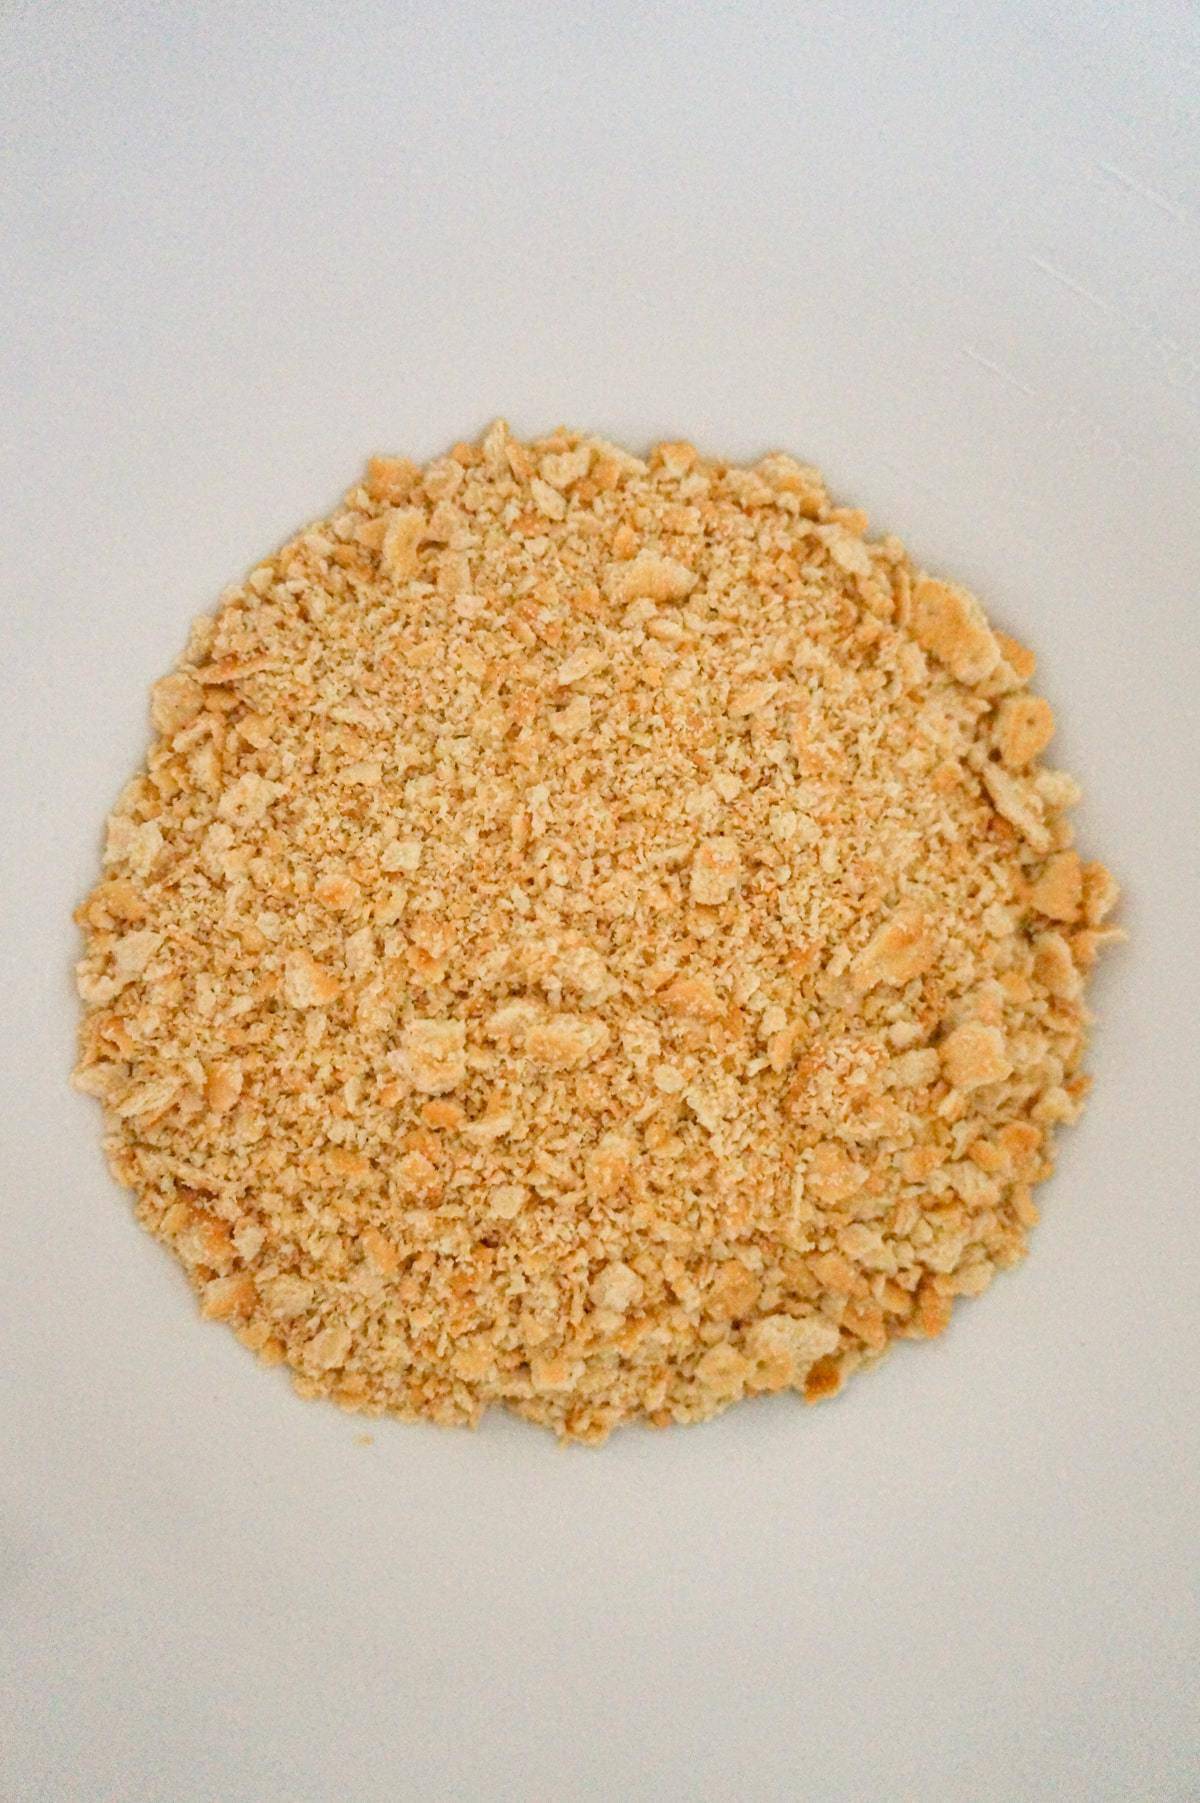 Ritz cracker crumbs in a mixing bowl